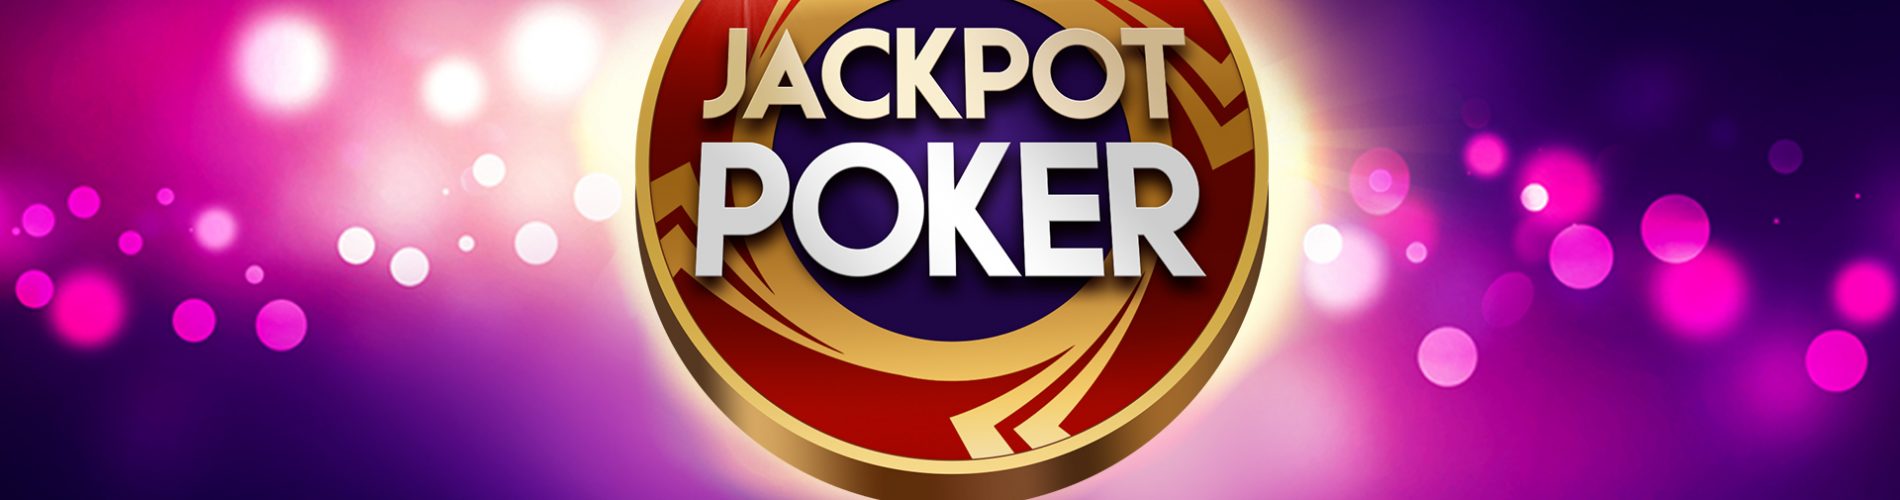 Jackpot Poker by Pokerstars